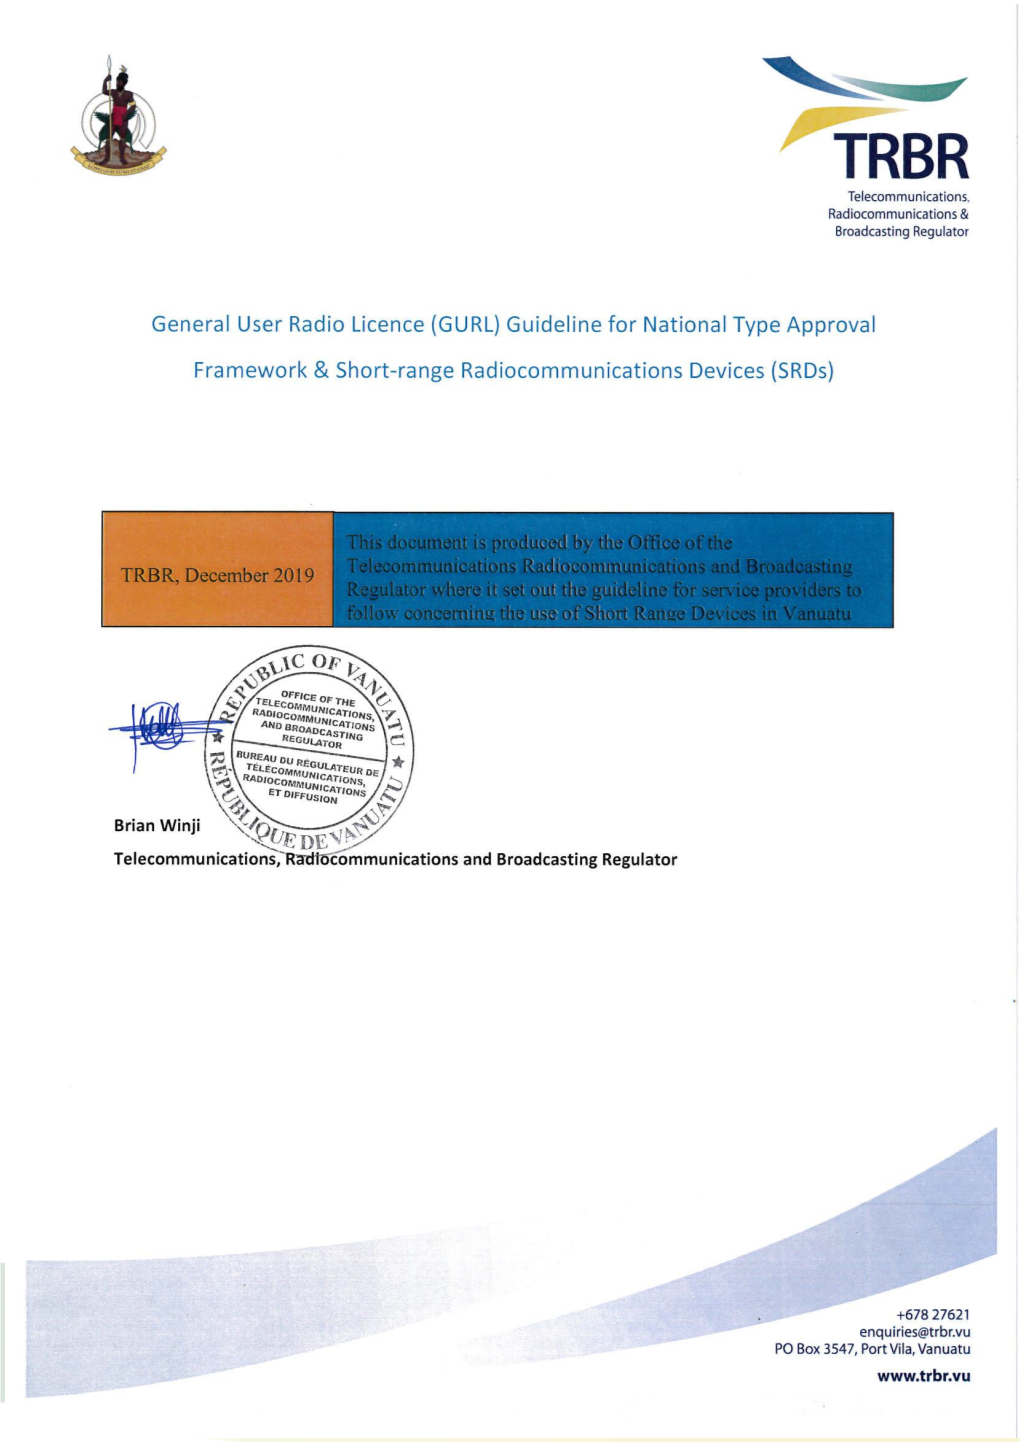 General User Radio Licence (GURL) Guideline for National Type Approval Framework & Short-Range Radiocommunications Devices (